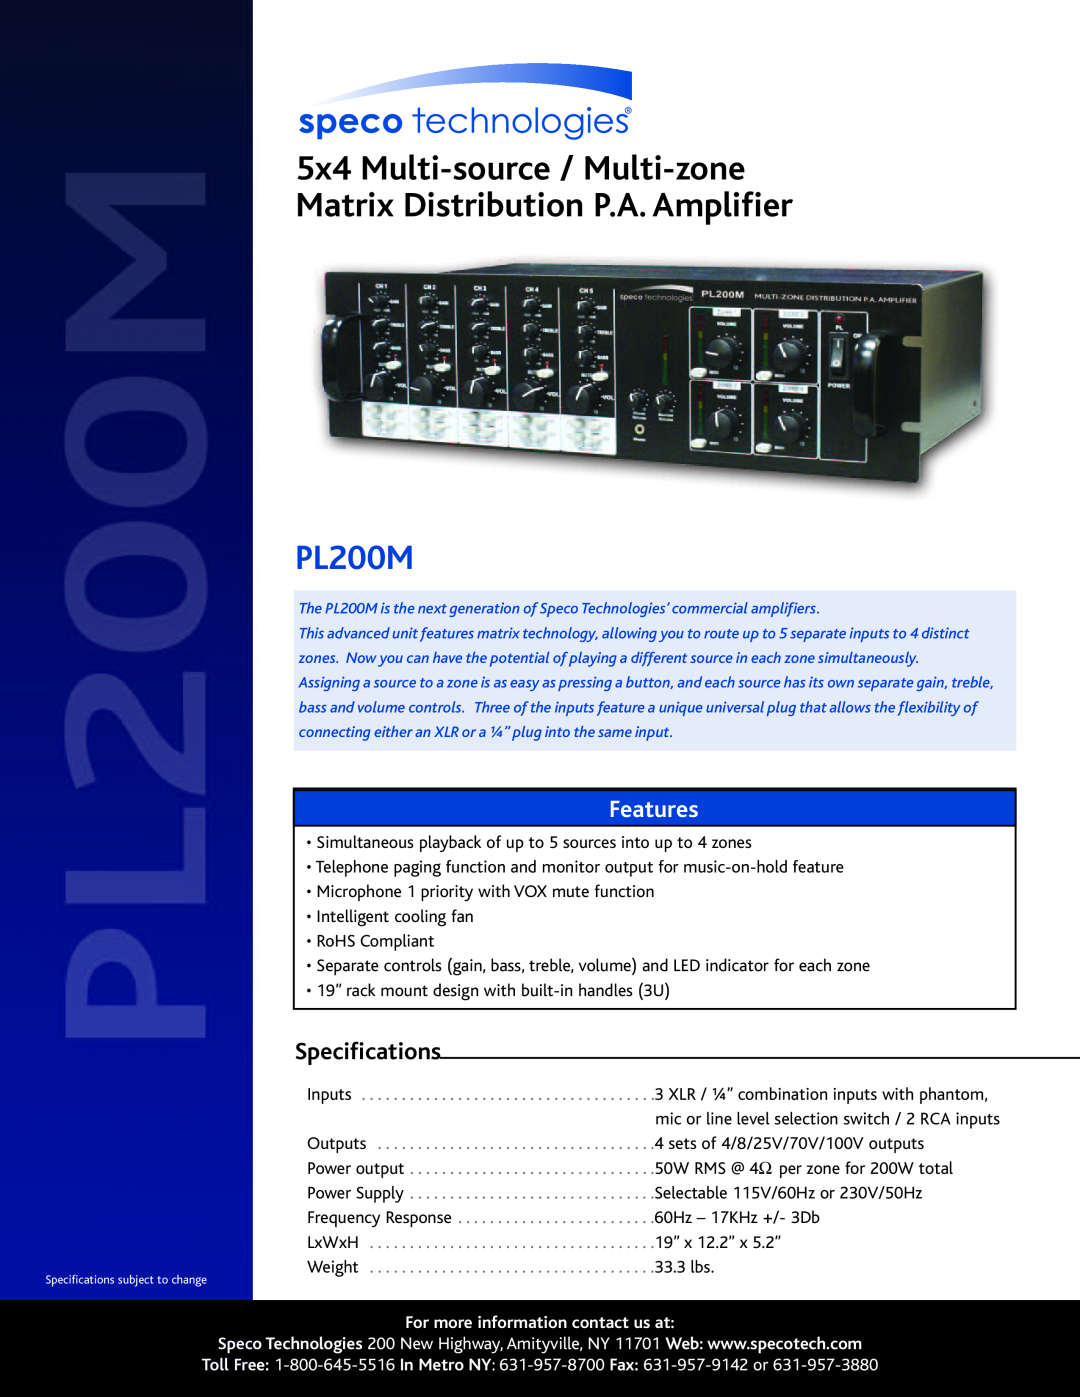 Speco Technologies PL200M specifications 5x4 Multi-source / Multi-zone, Matrix Distribution P.A.Amplifier, Features 